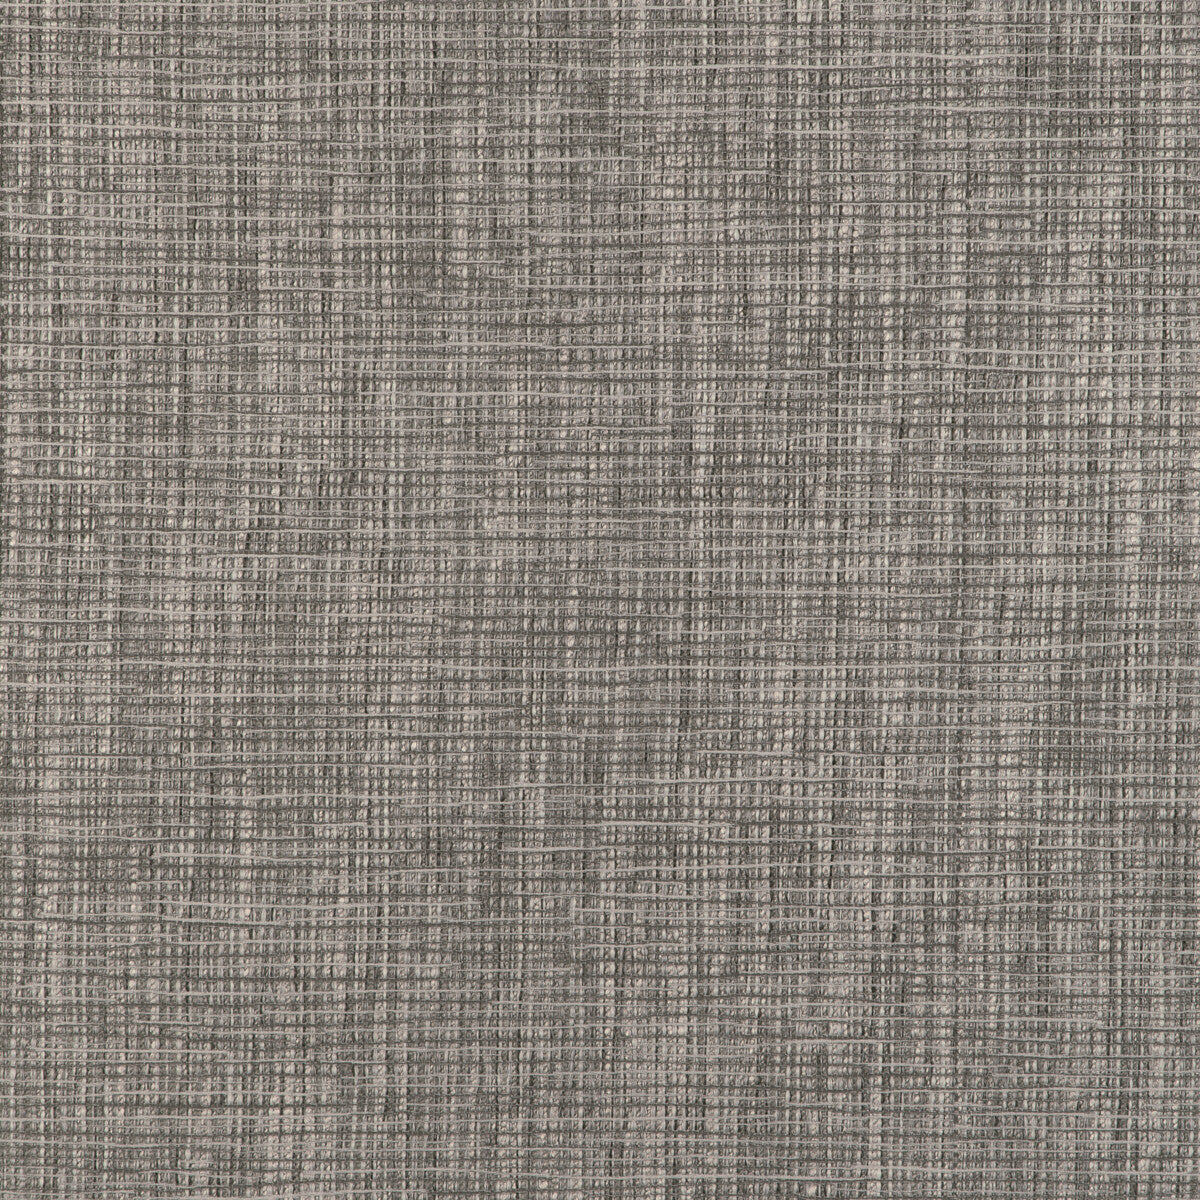 Kravet Smart fabric in 36668-1121 color - pattern 36668.1121.0 - by Kravet Smart in the Performance Kravetarmor collection